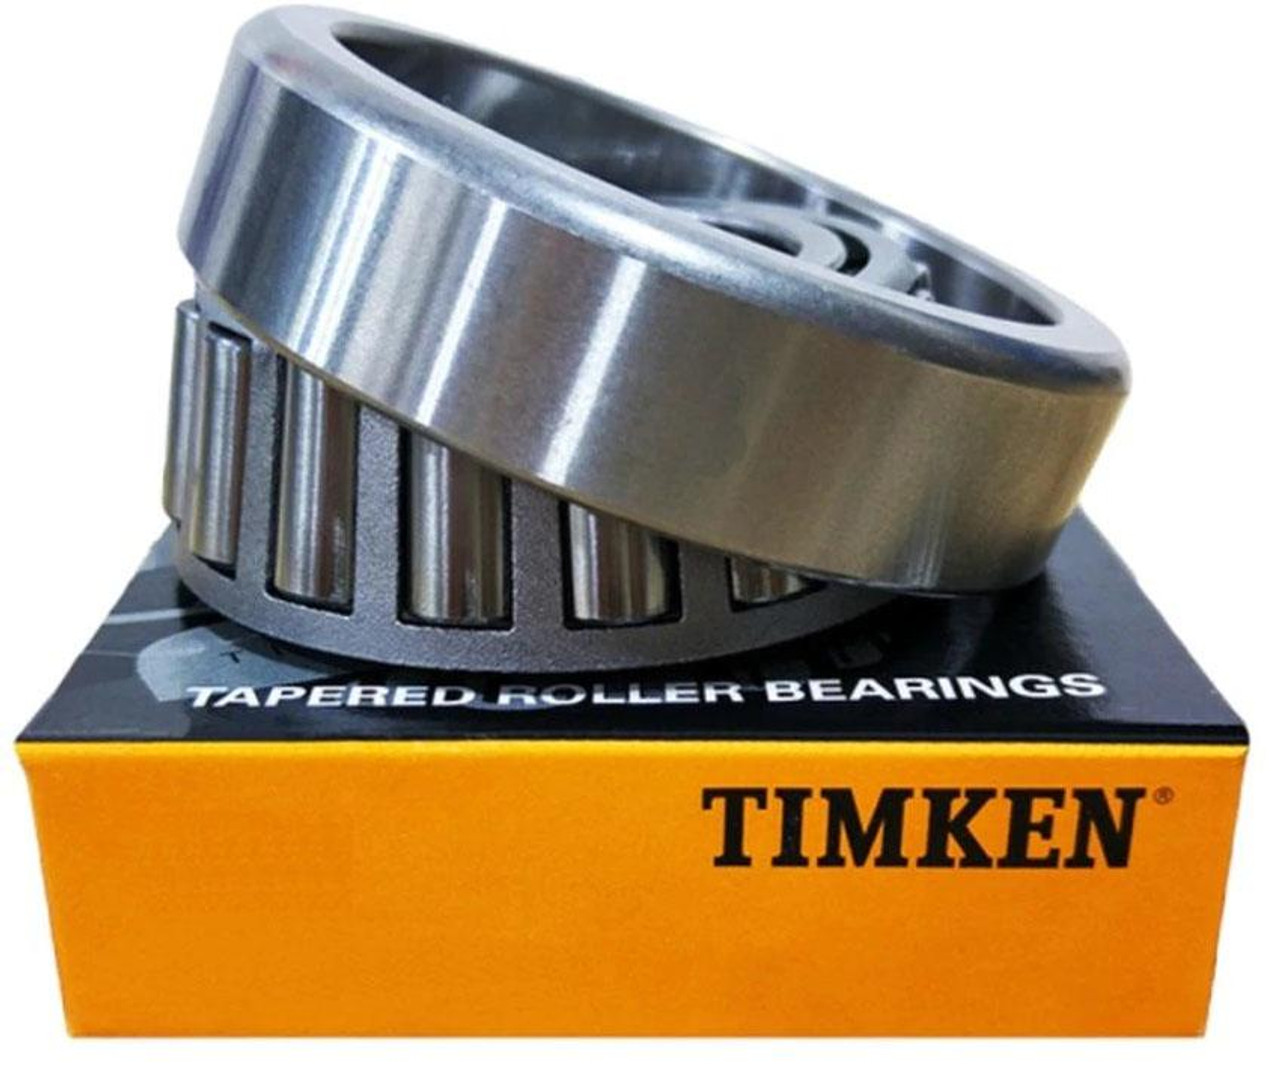 Timken® Metric Cup & Cone Set  32030XM-90KM3